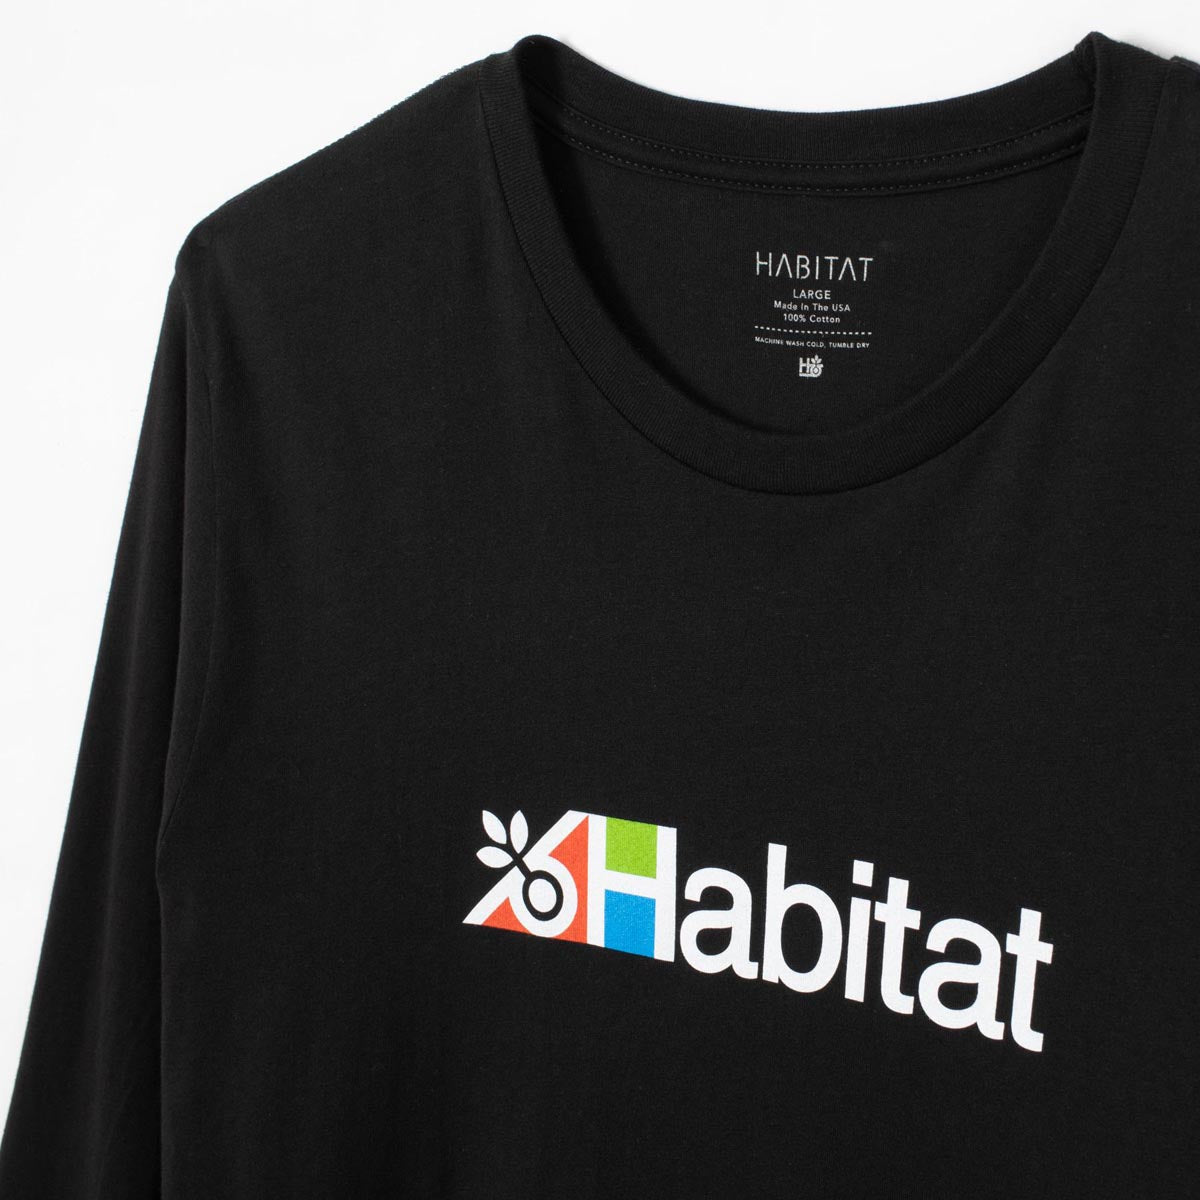 Habitat Transit Long Sleeve T-Shirt - Black image 2